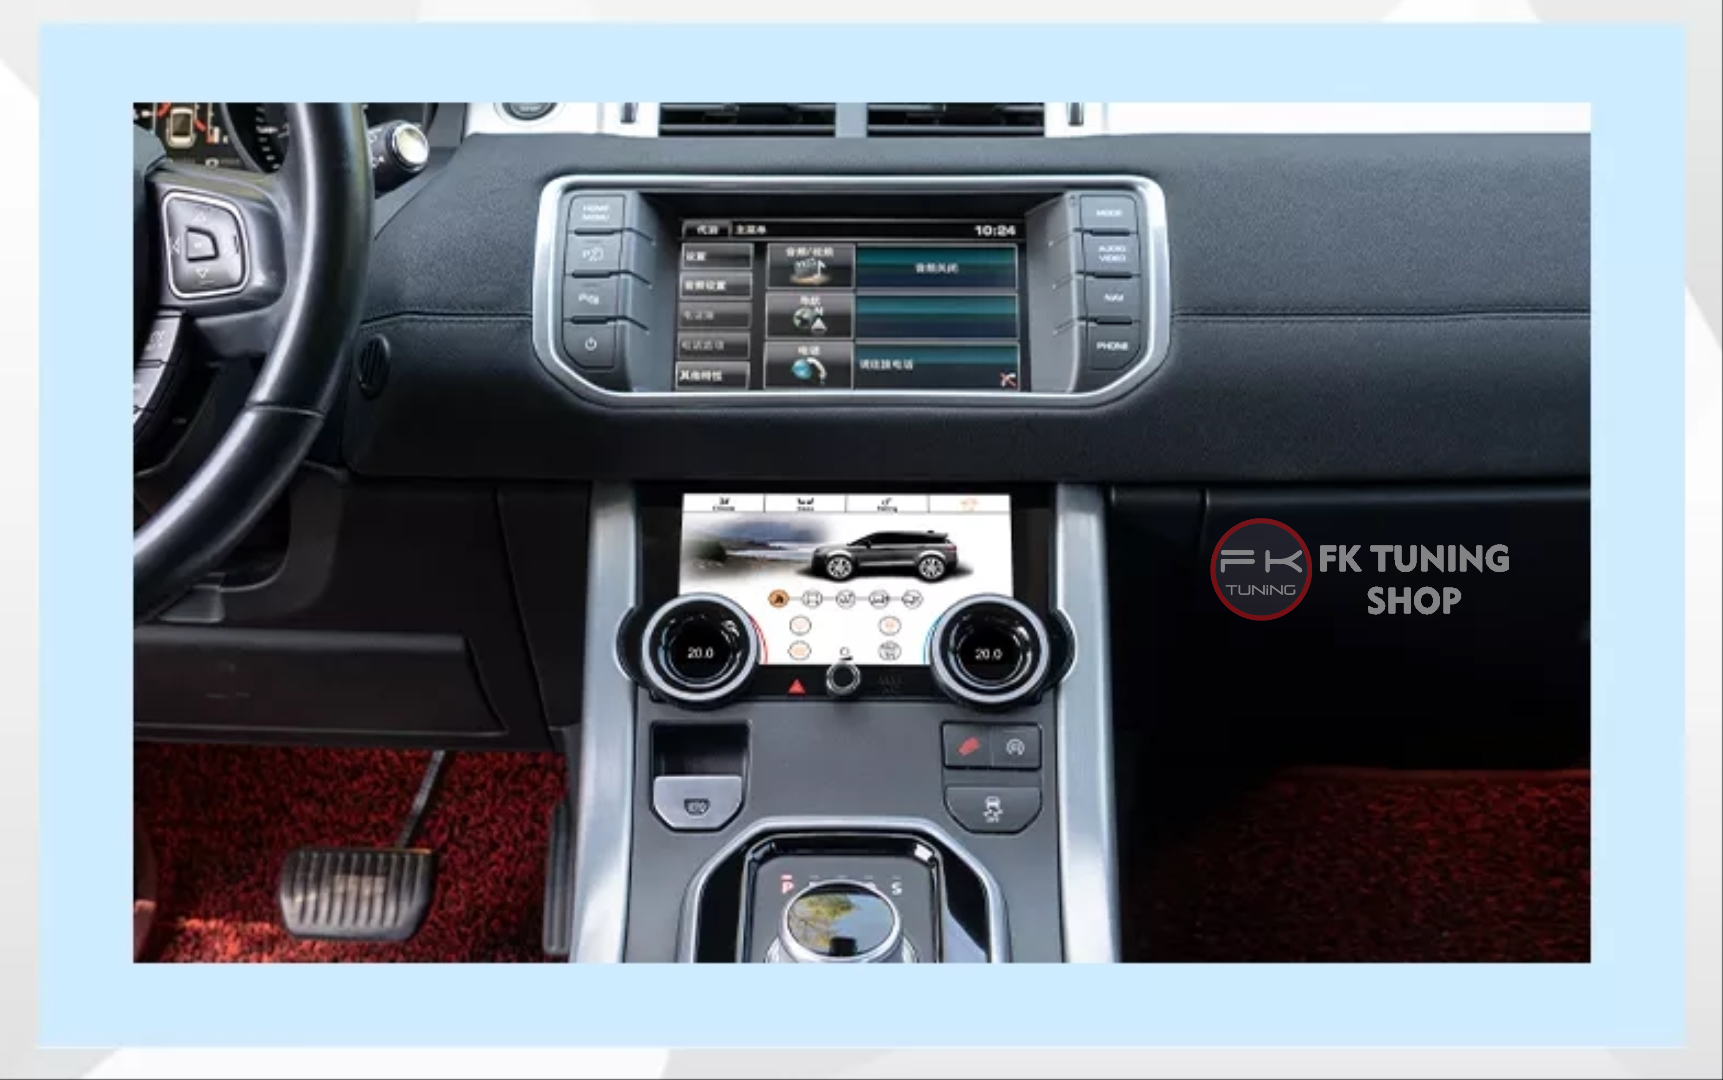 Range Rover Evoque LCD/Dokunmatik Klima Paneli 2013-2018